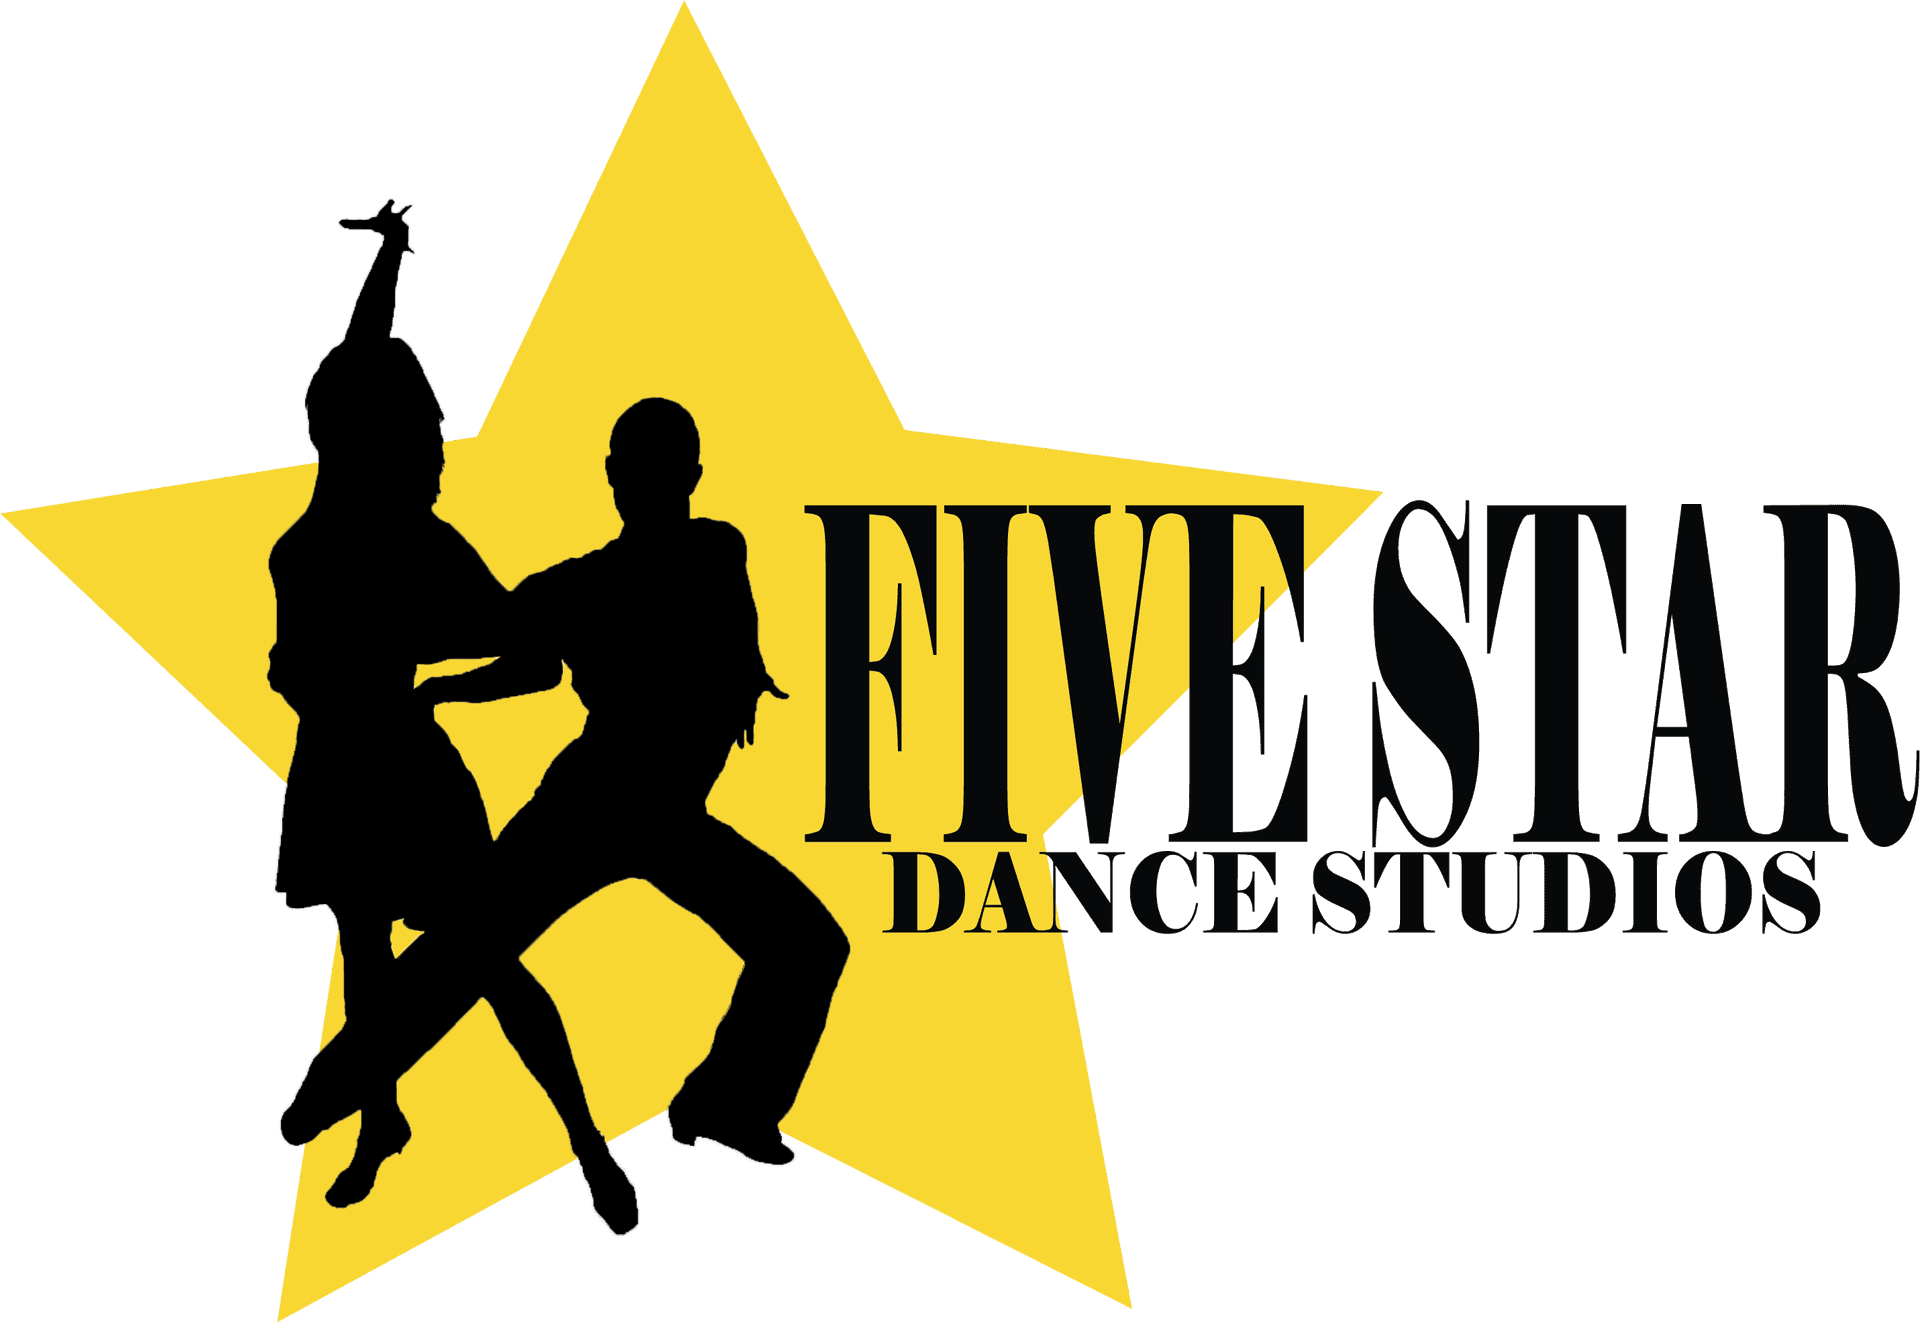 Five Star Dance Studios Logo PNG